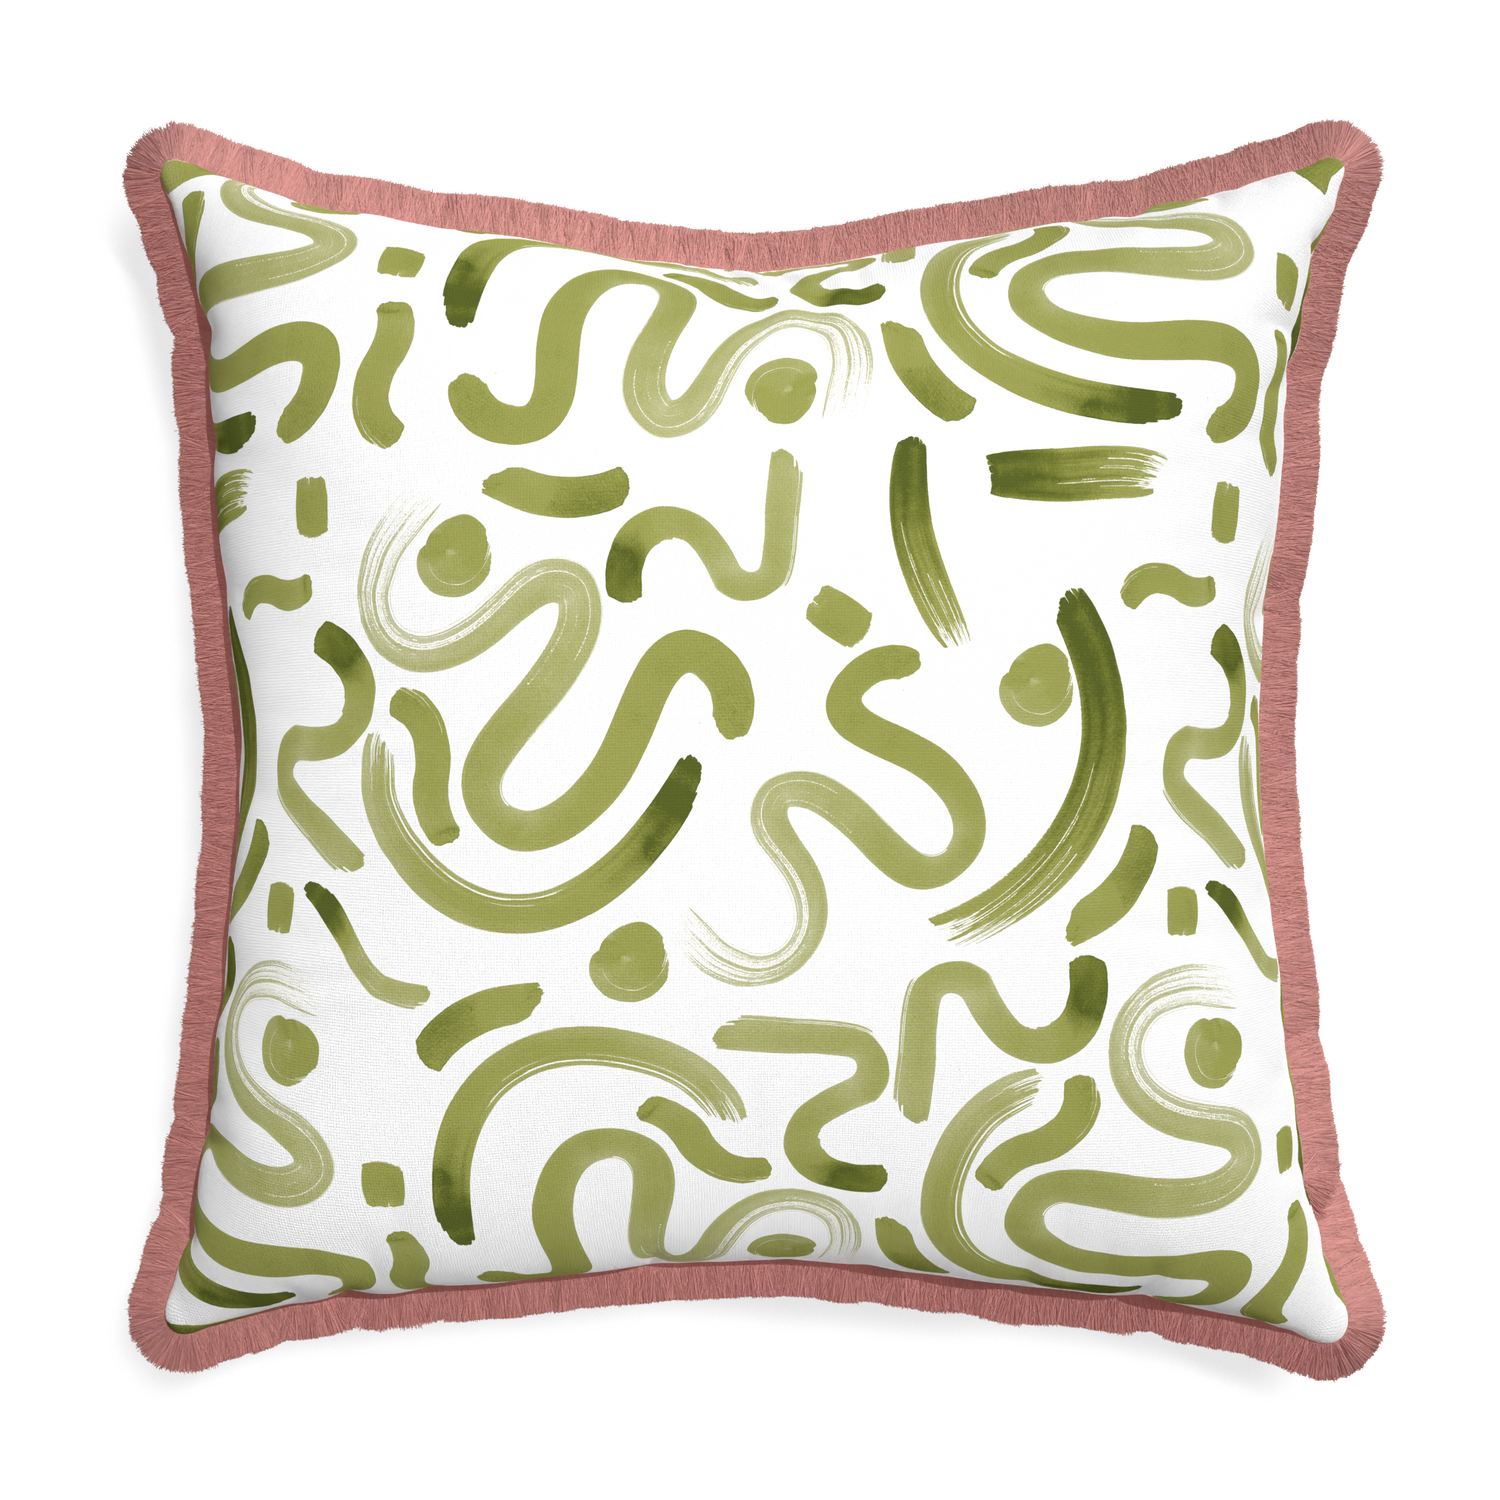 Euro-sham hockney moss custom pillow with d fringe on white background